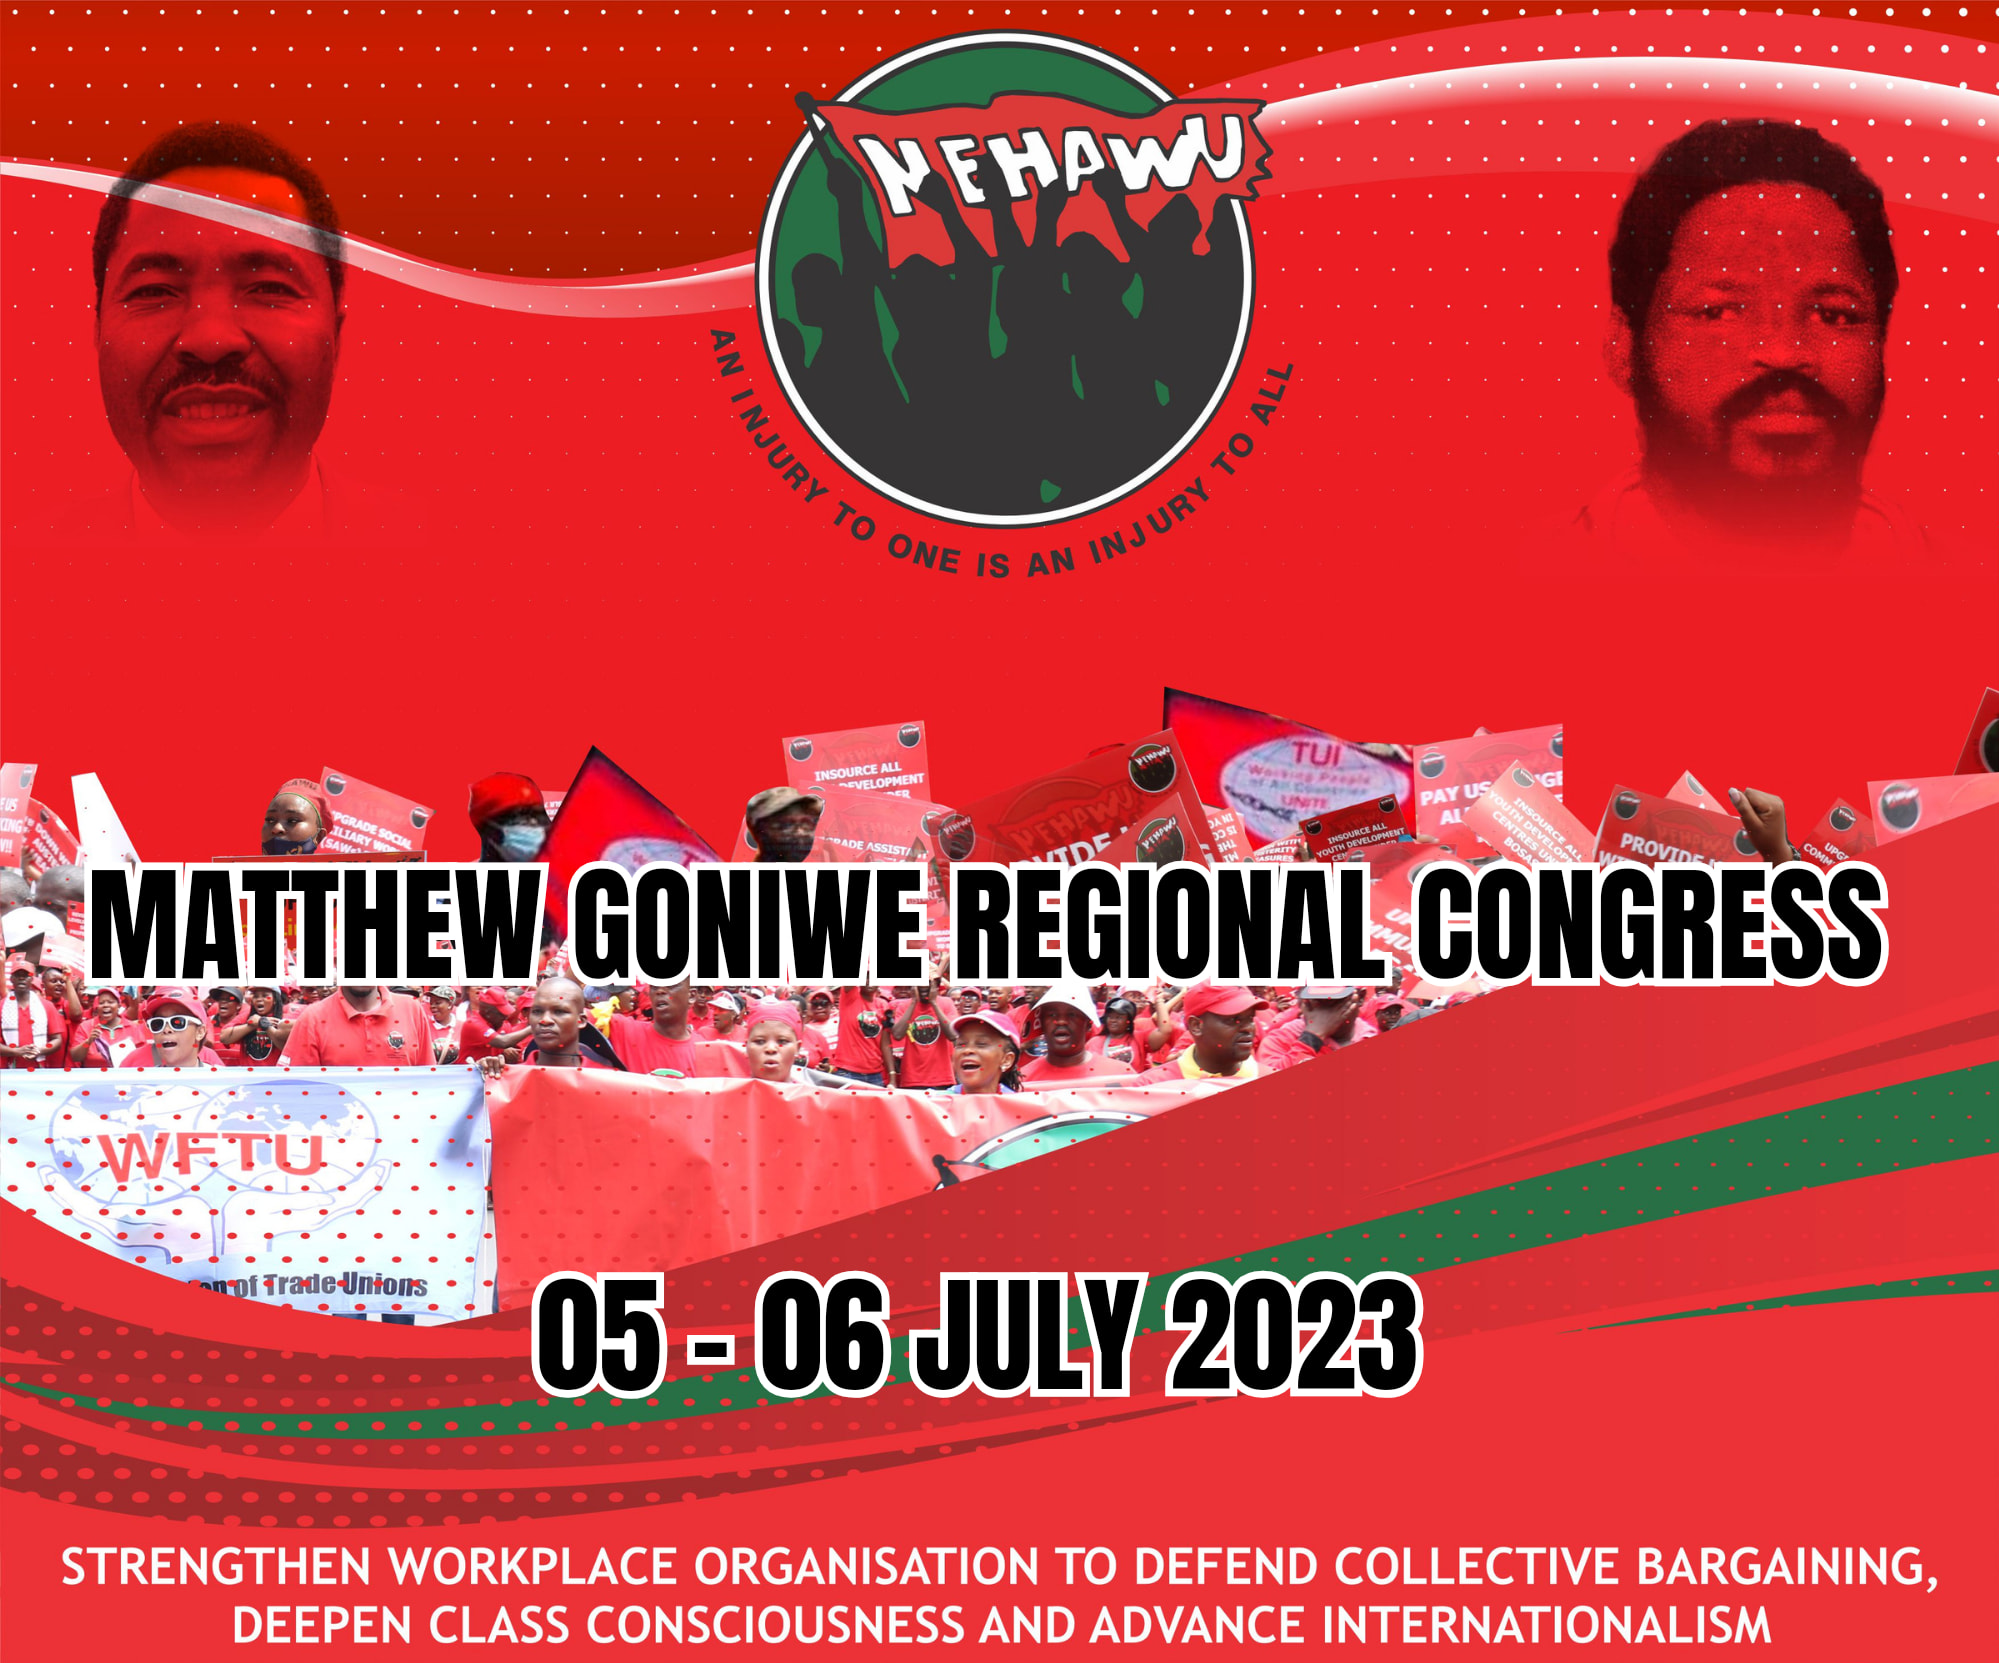 Matthew Goniwe 8th Regional Congress 05 - 06 July 2023.